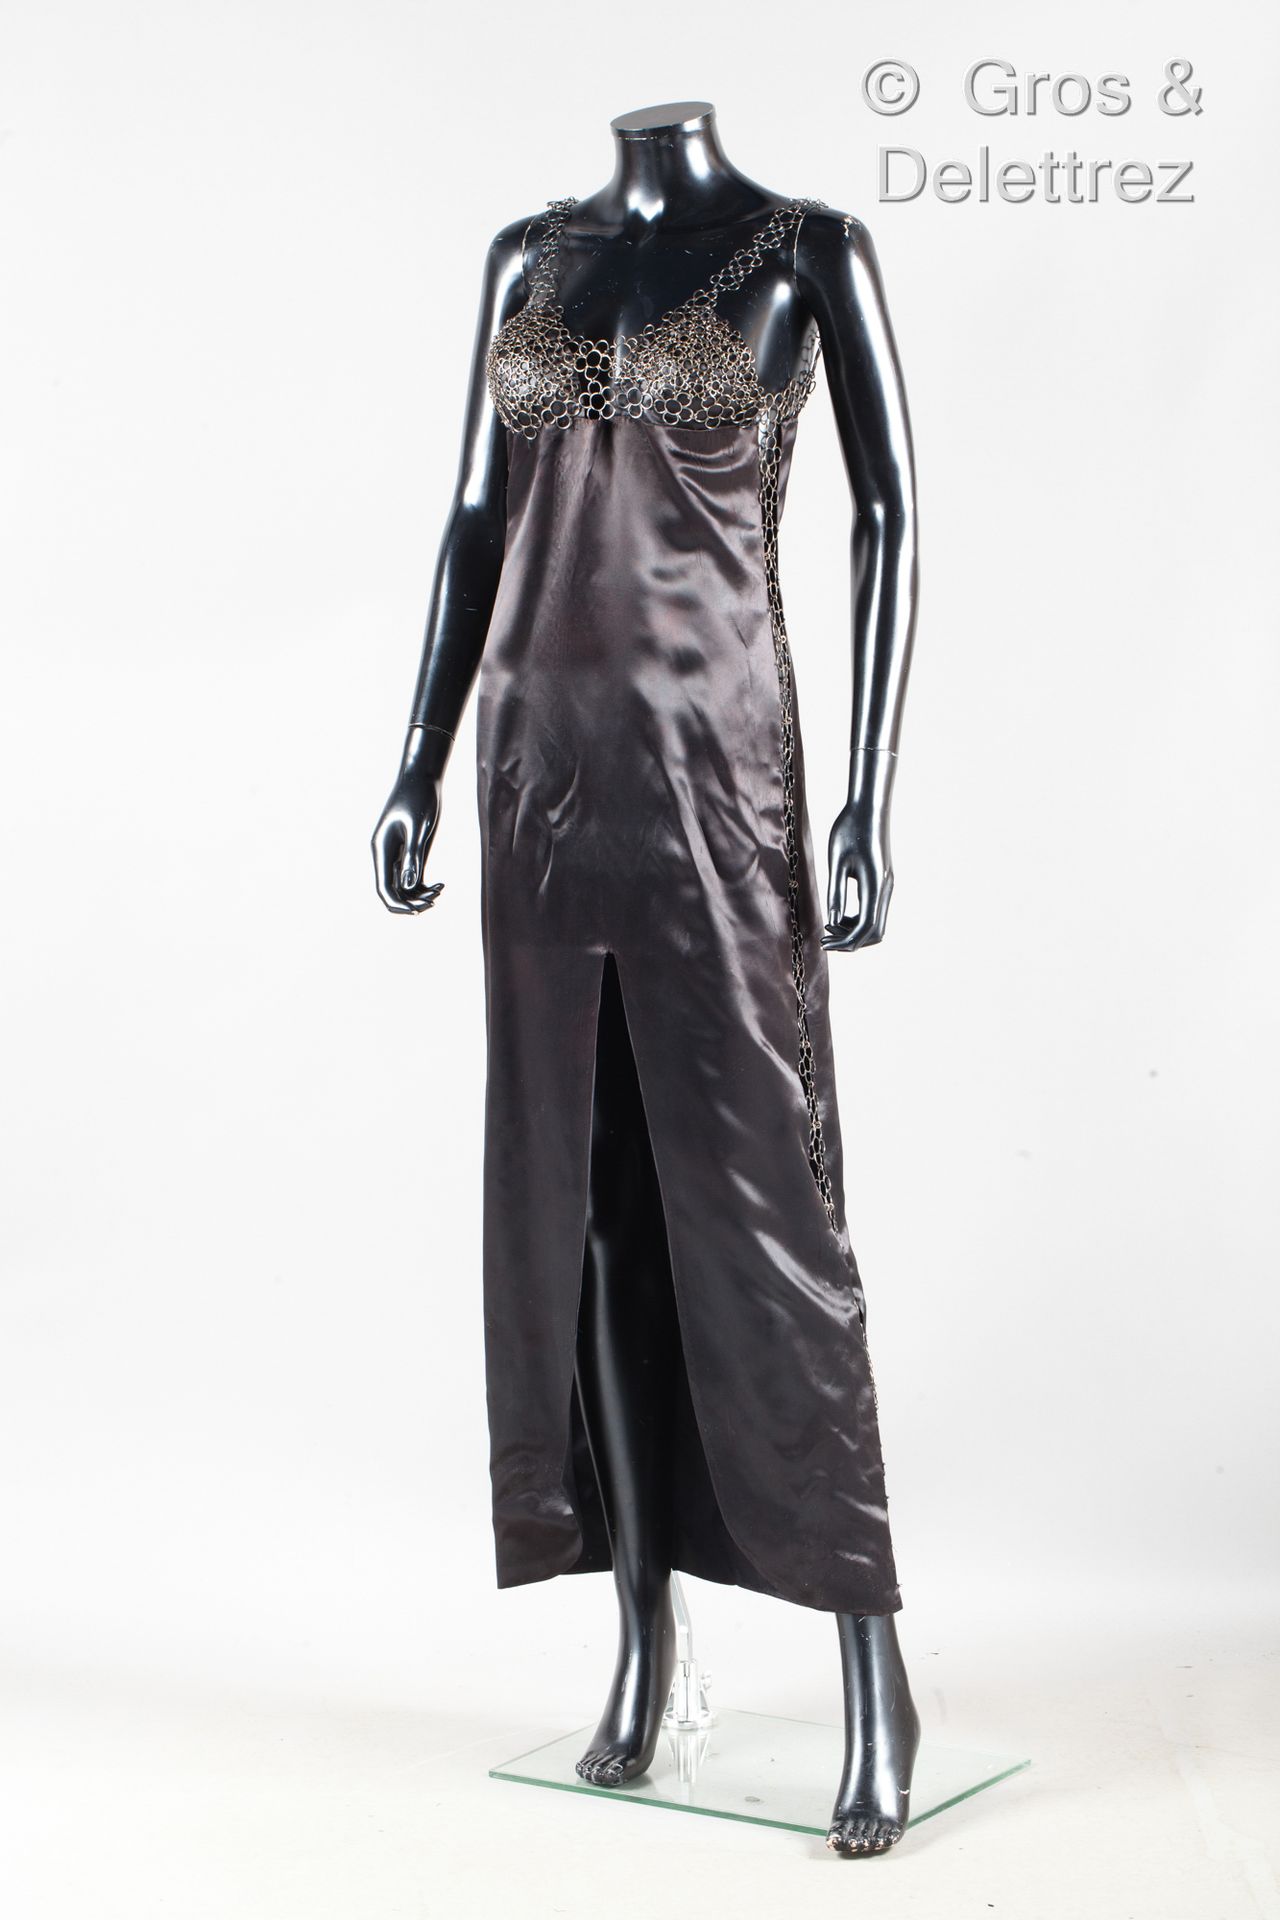 Paco RABANNE 黑色缎面长裙，胸部覆盖着清漆金属菊花图案，继续用两条协调的带子，提醒侧边开口，前面有缝隙（缺爪，事故）。